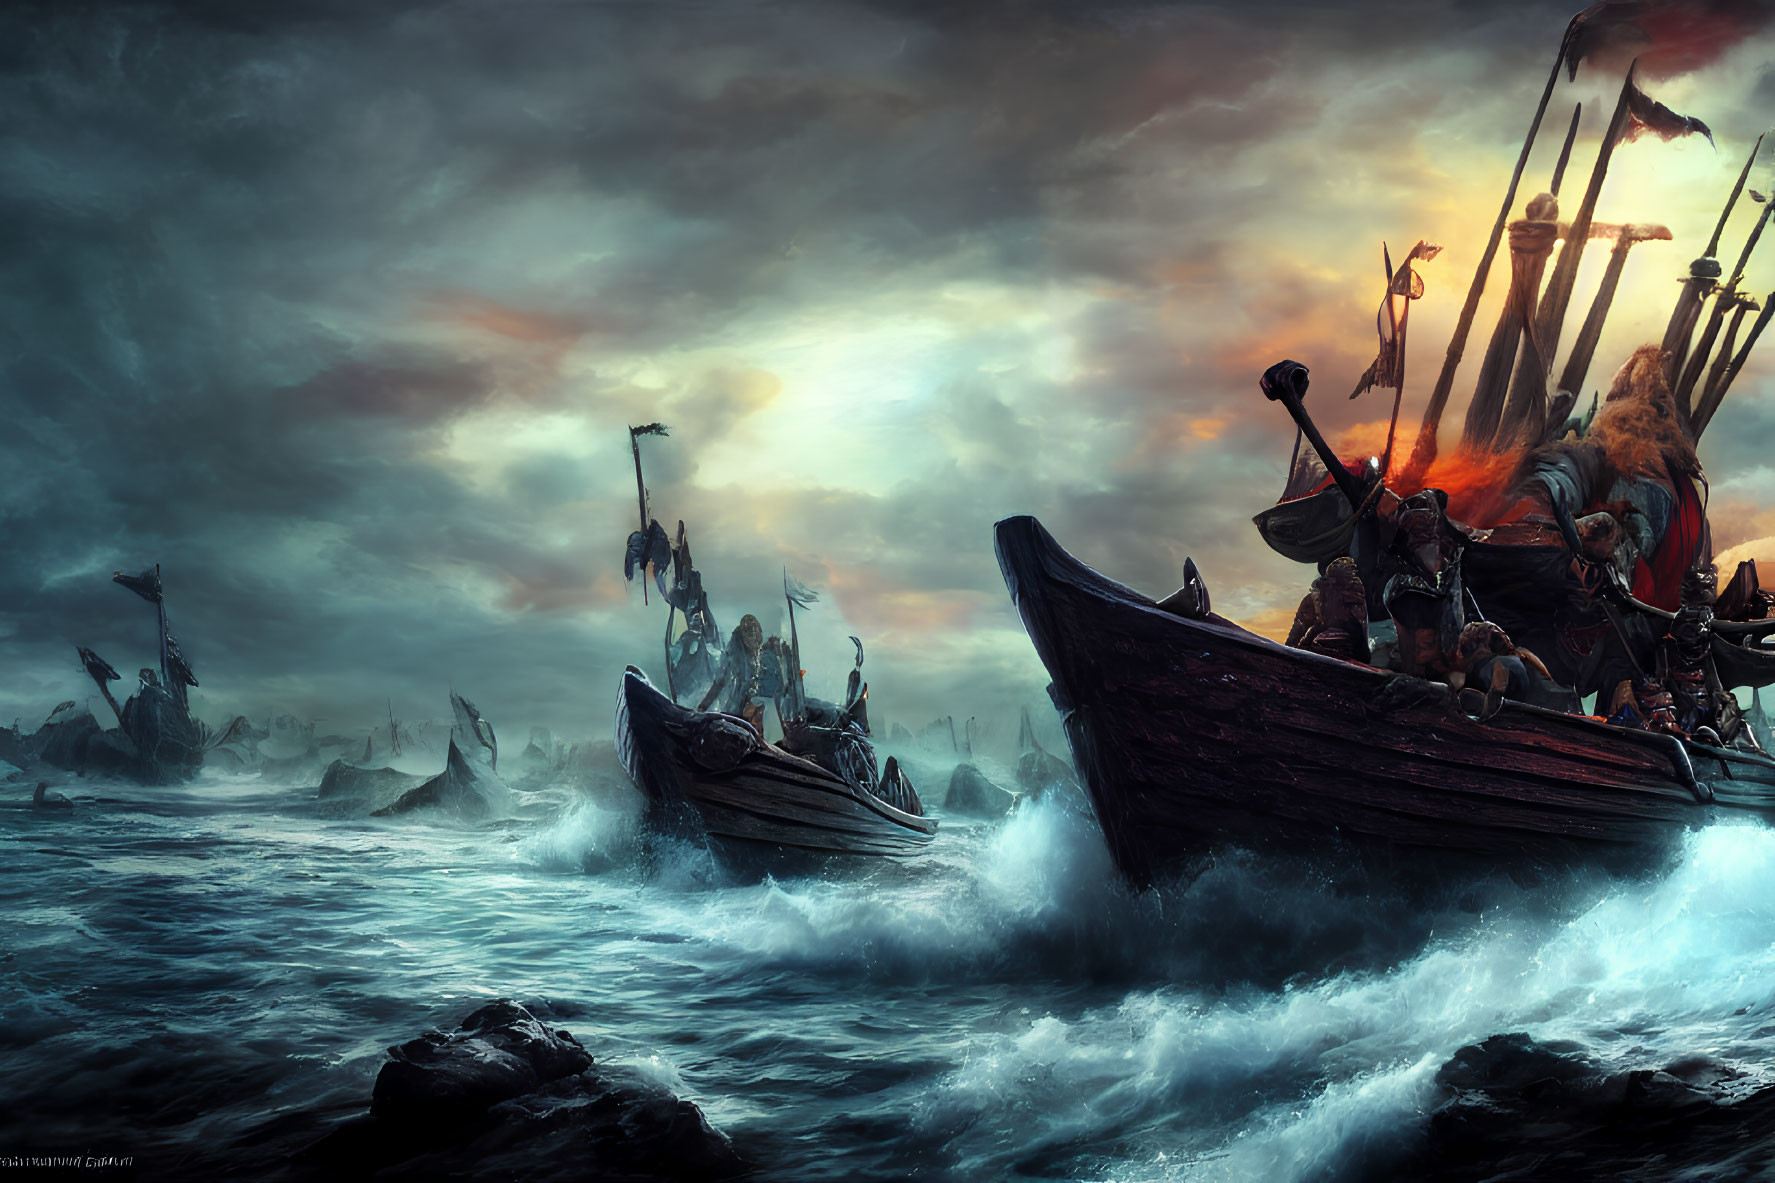 Dramatic Viking ship scene with warriors in turbulent seas